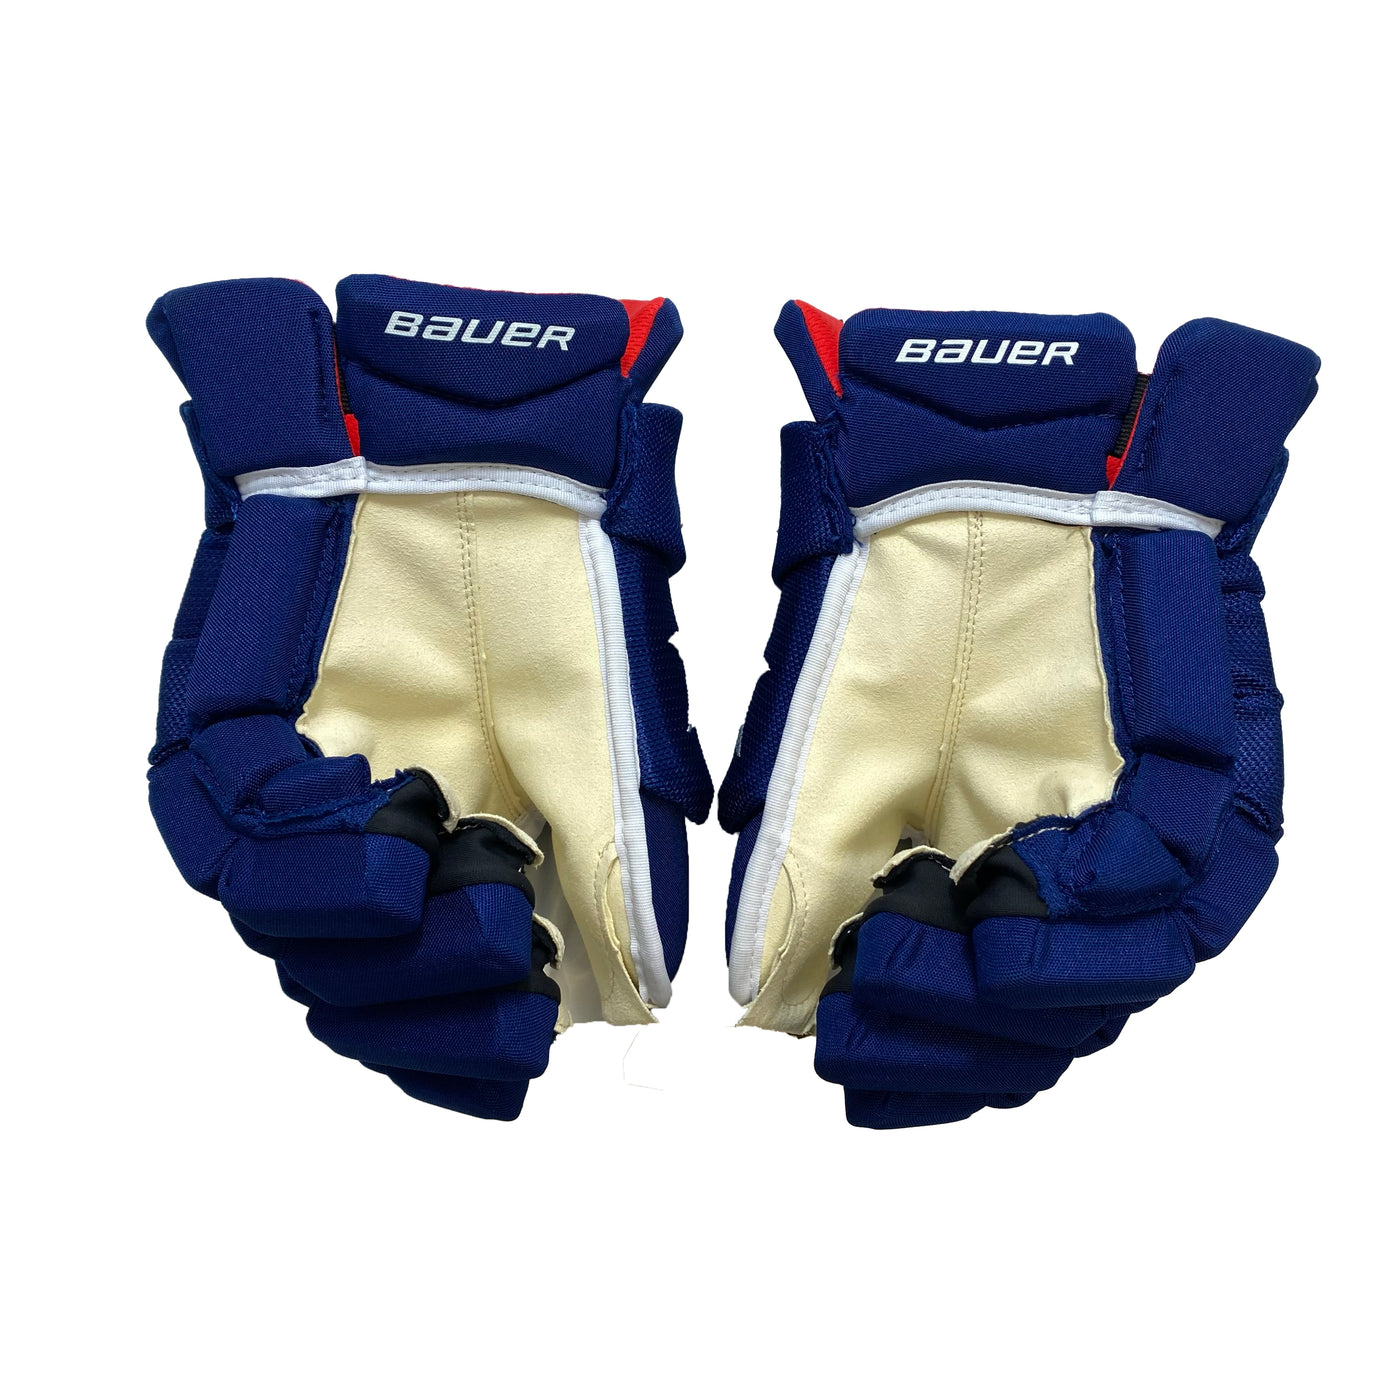 Bauer Vapor 2X Pro - NCAA STOCK - Pro Stock Hockey Gloves - Team Issue